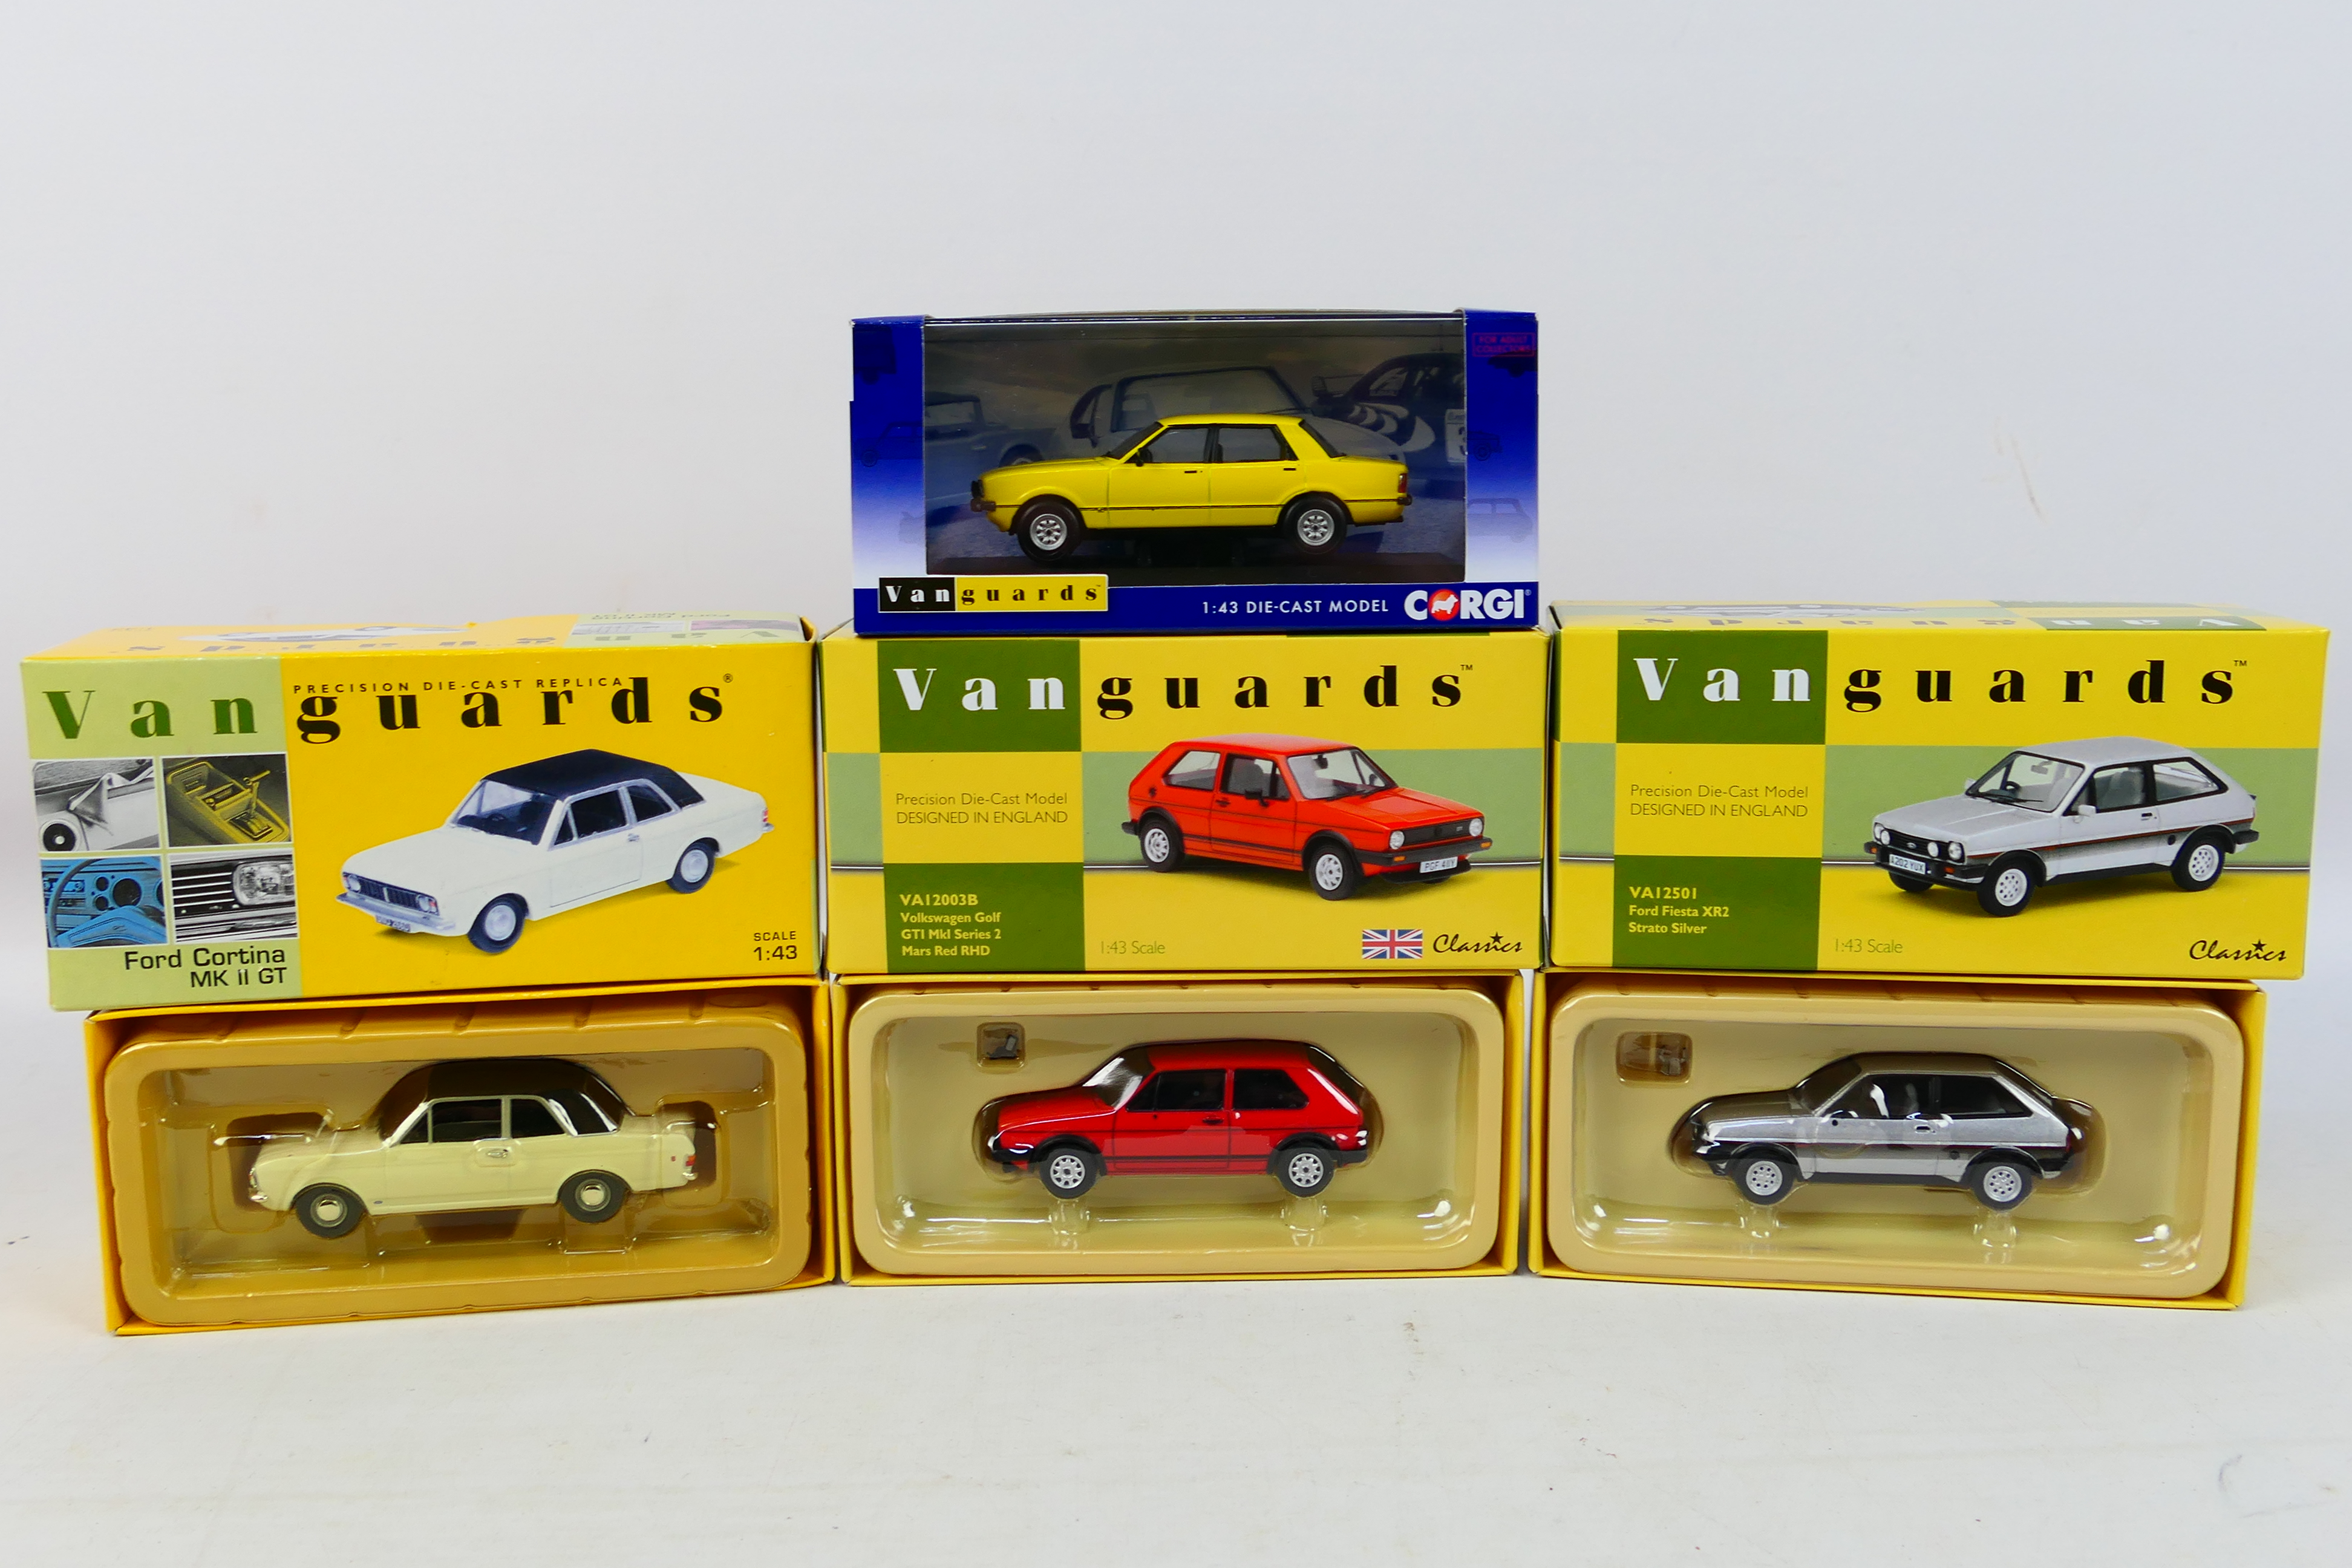 Vanguards - Four boxed Vanguards diecast model cars.